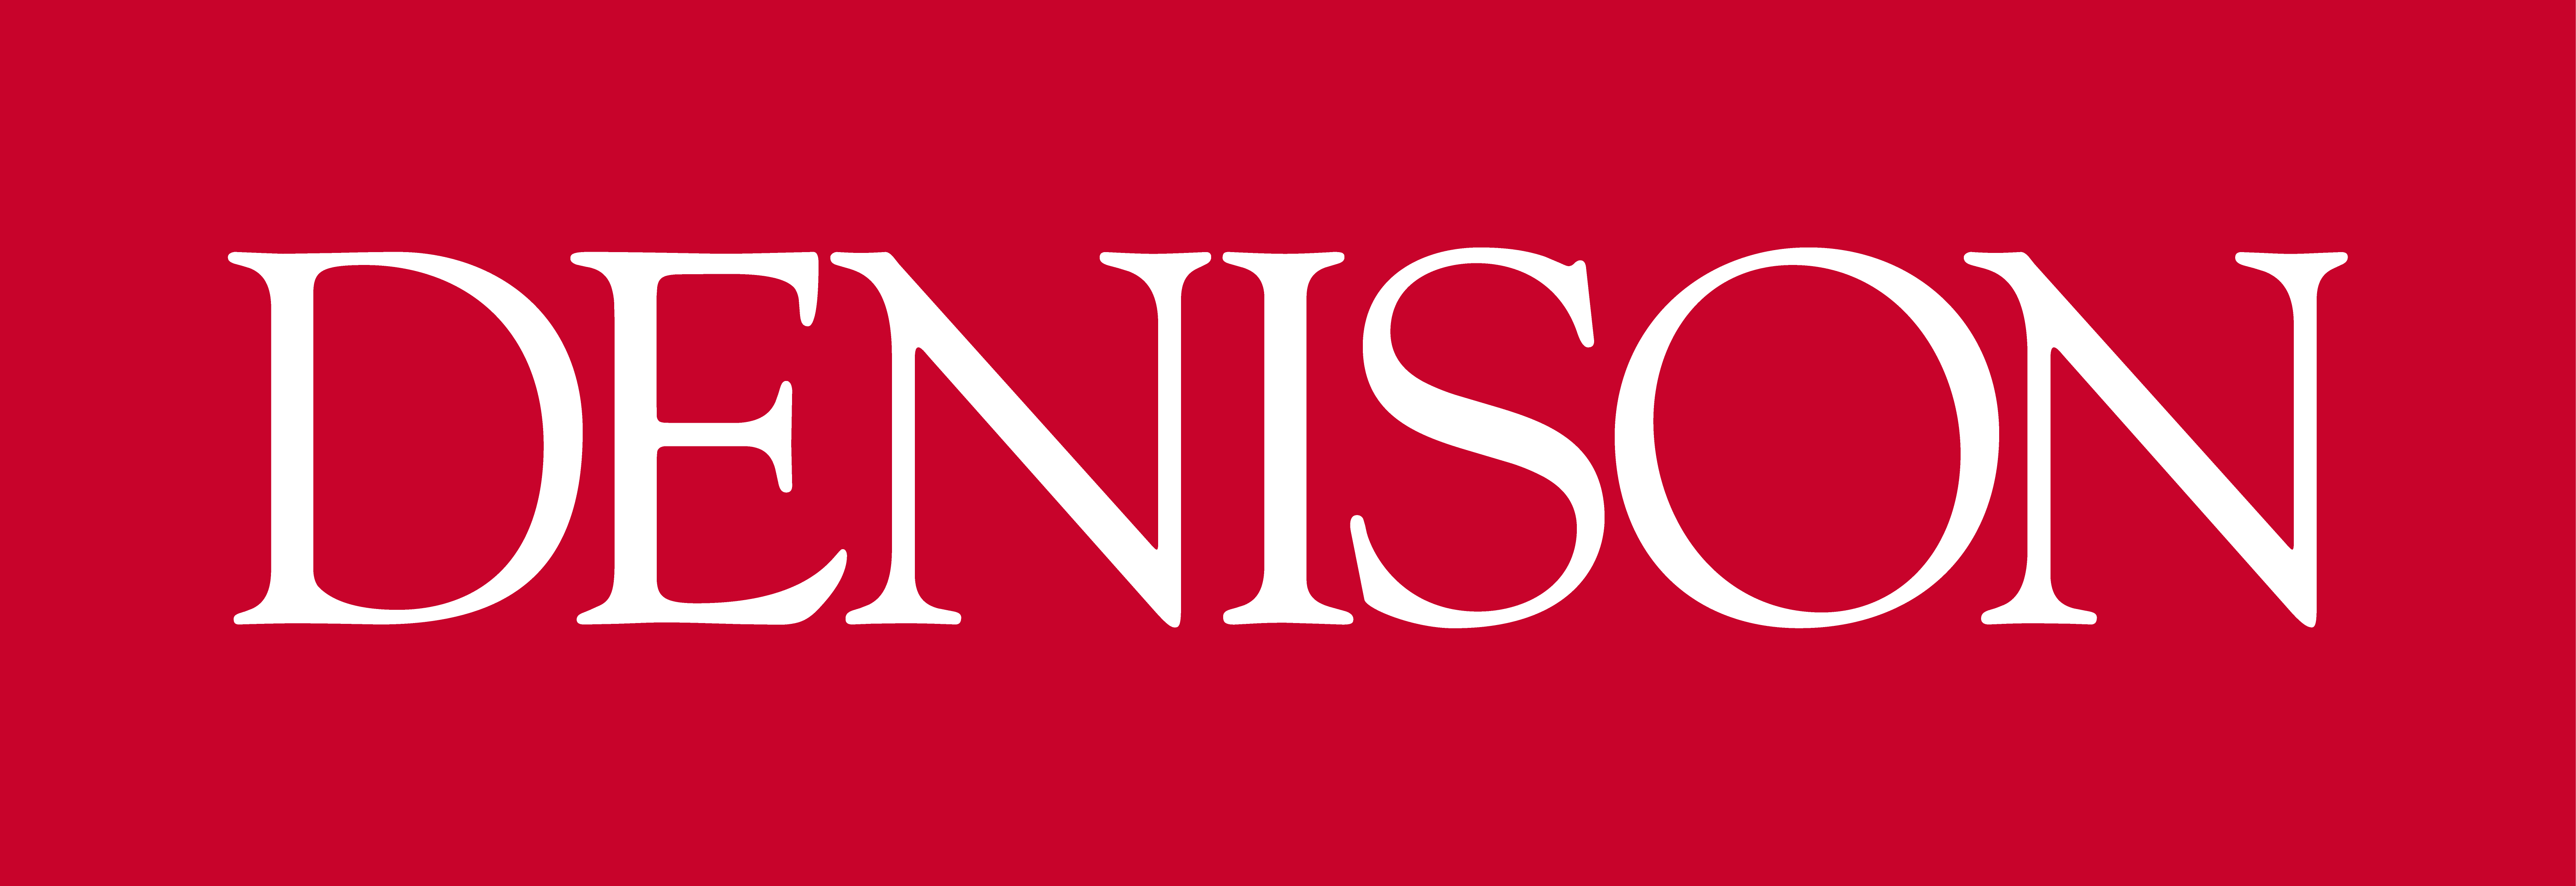 Denison University logo.png